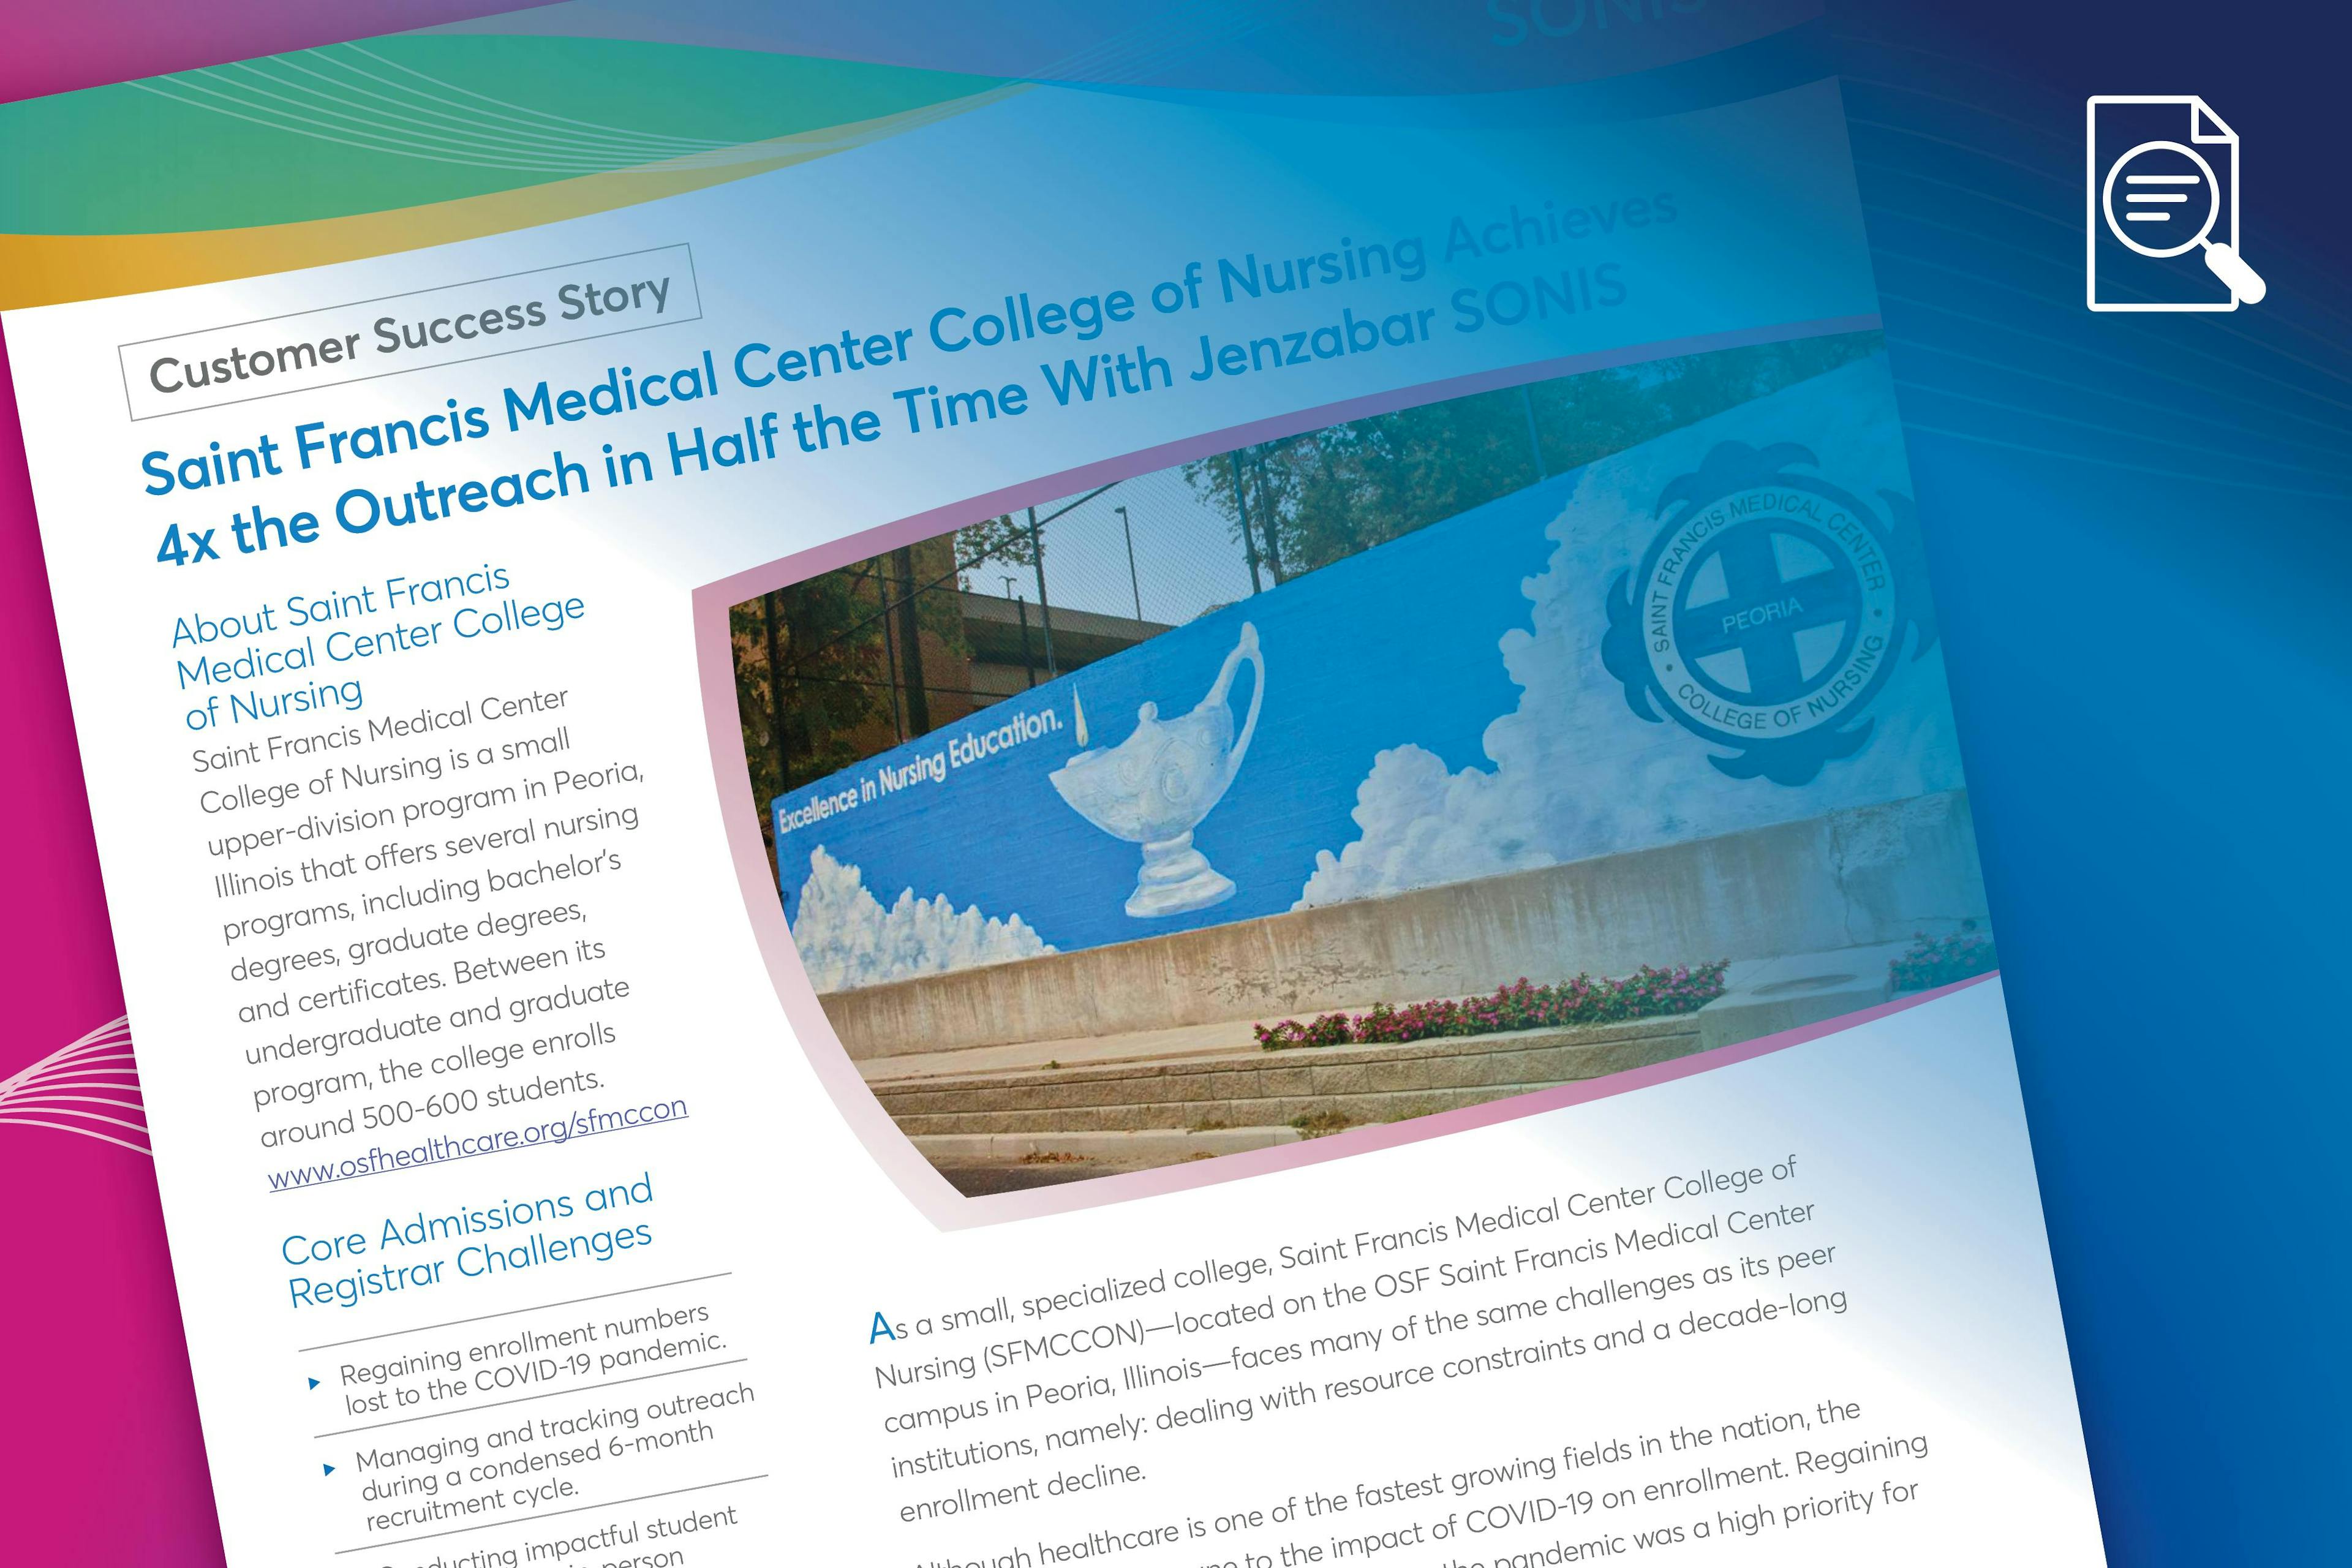 Case Study: Saint Francis Medical Center College of Nursing